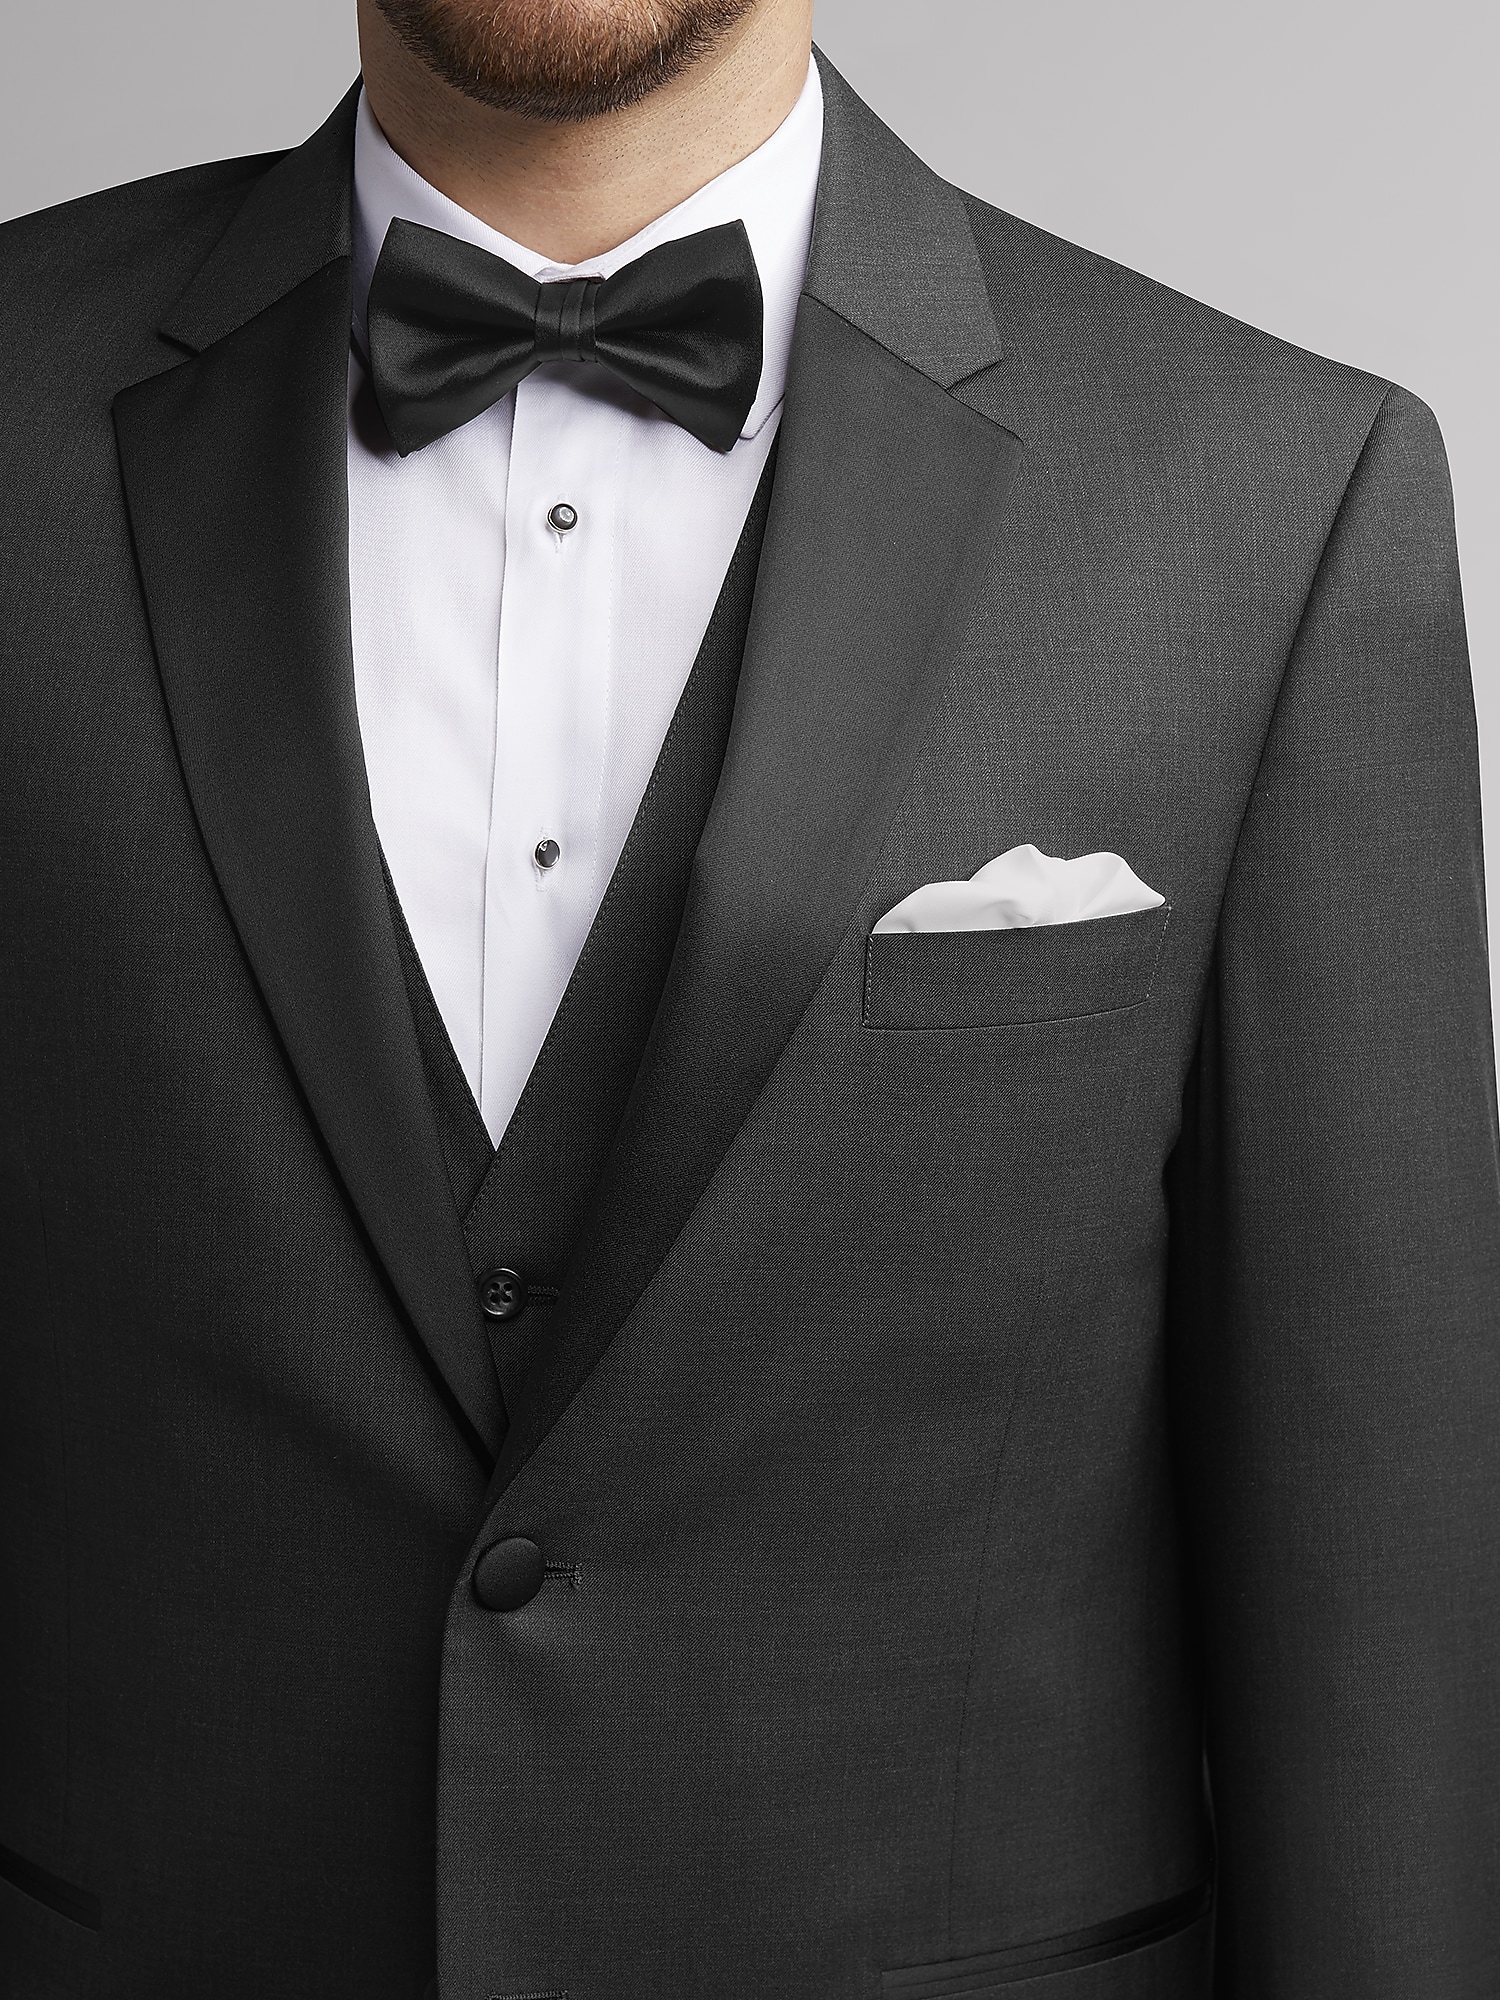 Performance Grey Tux by Calvin Klein | Tuxedo Rental